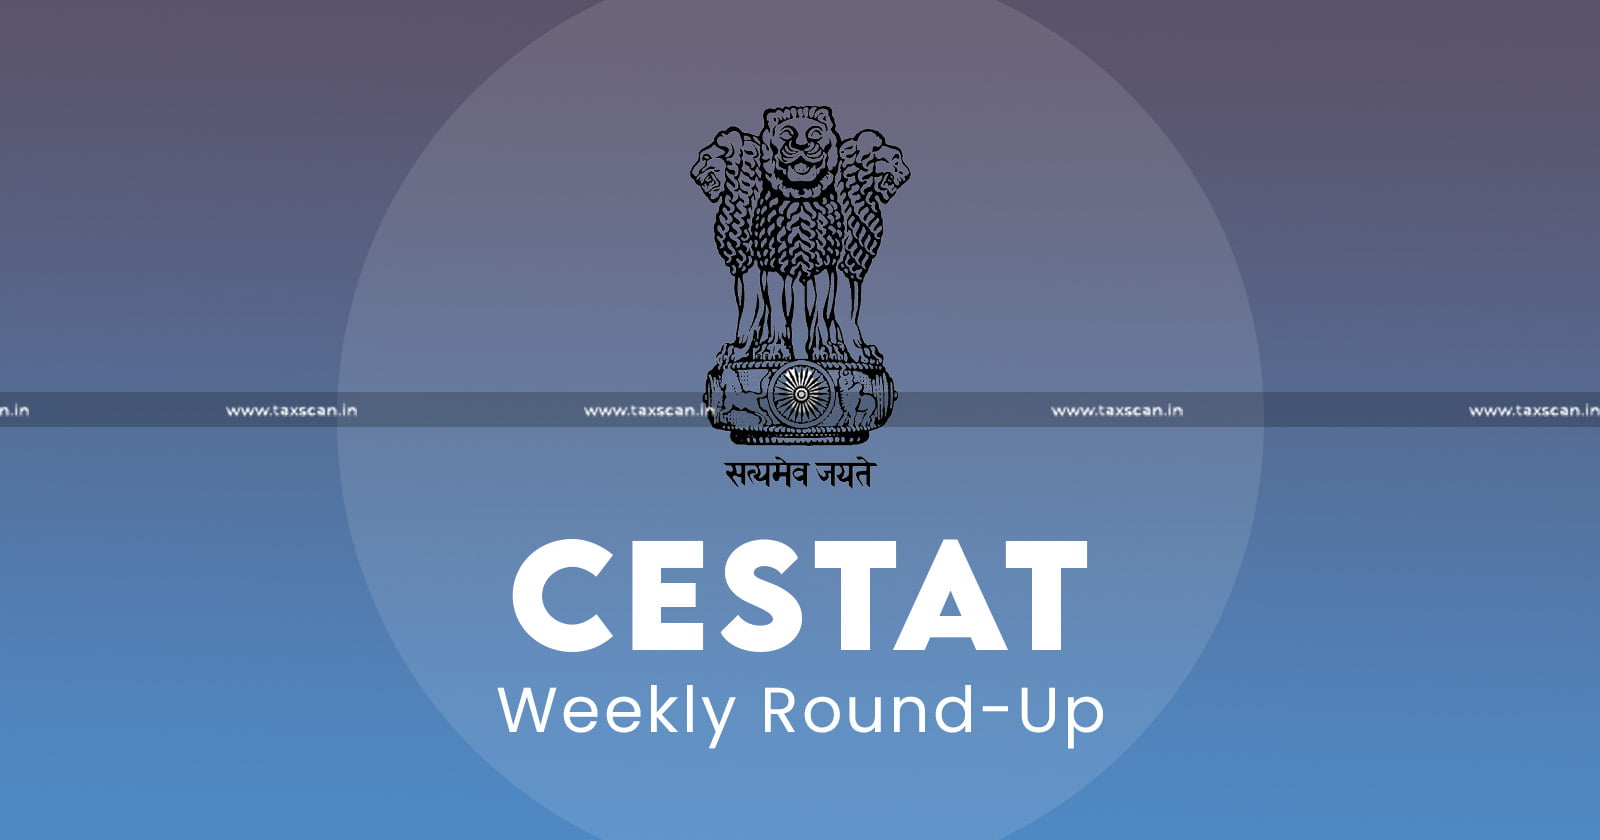 CESTAT Weekly Round-Up - CESTAT - taxscan